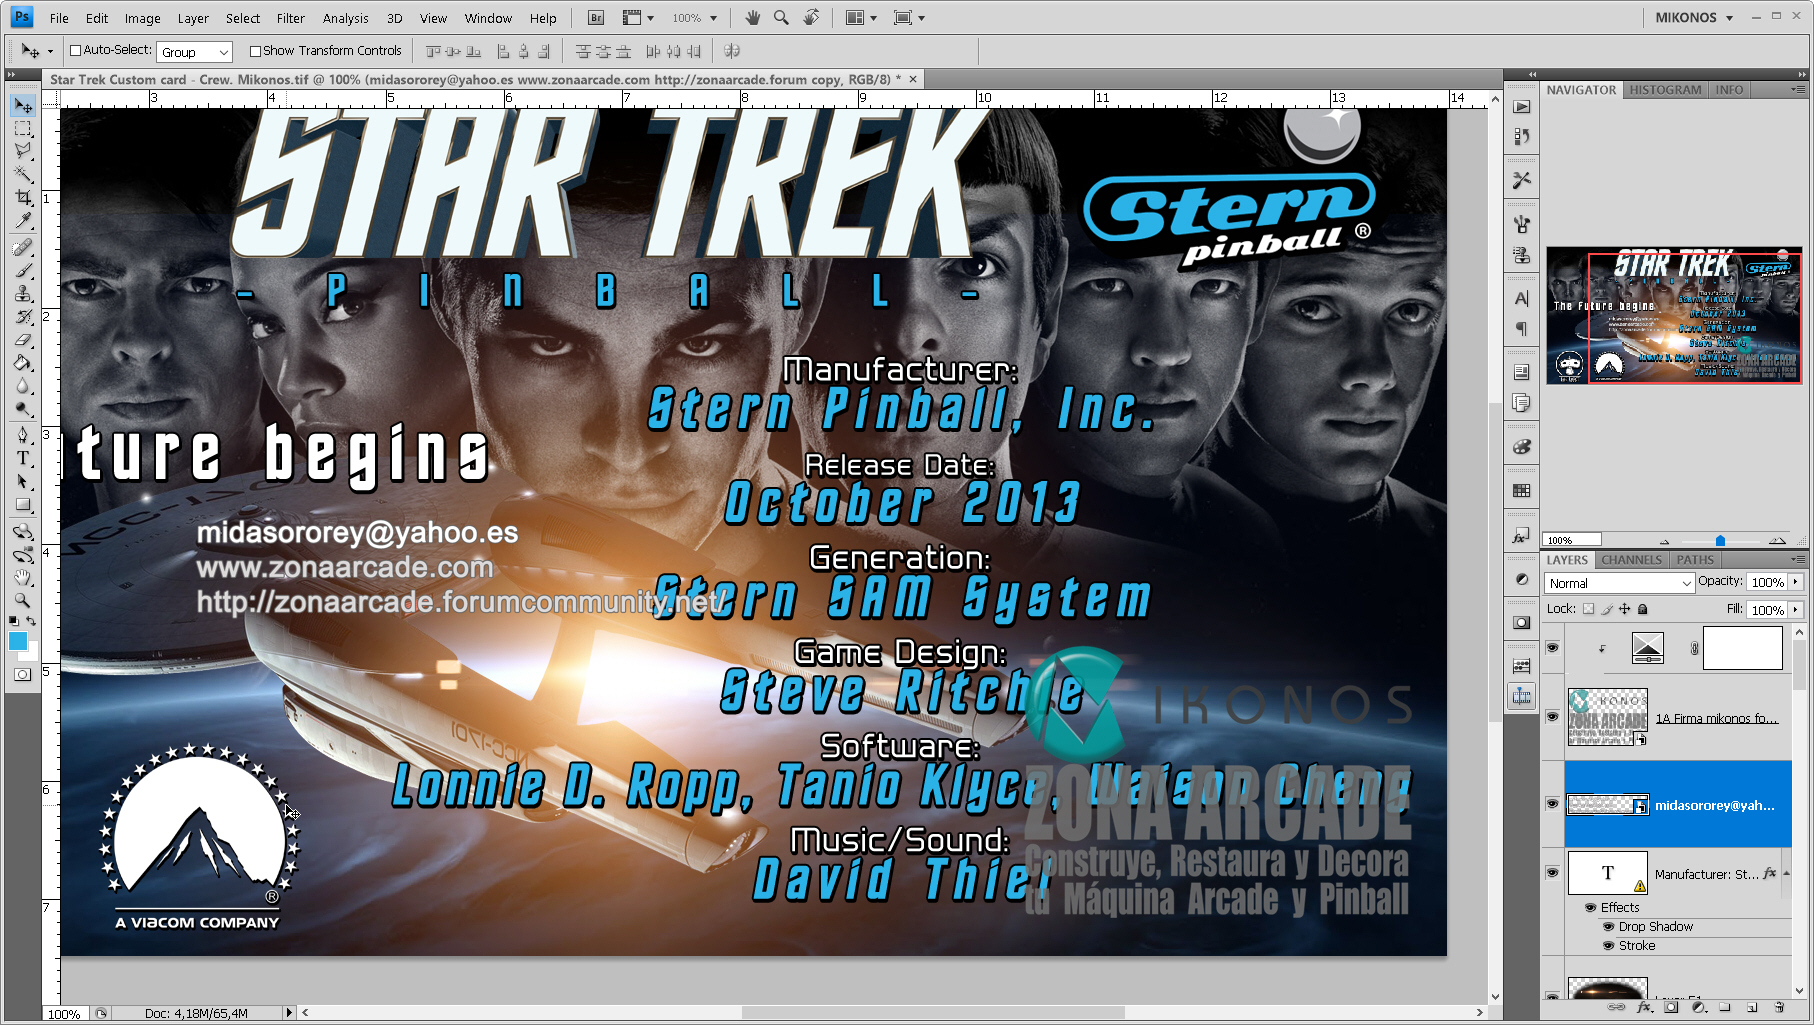 Star Trek Custom card - Crew. Mikonos2